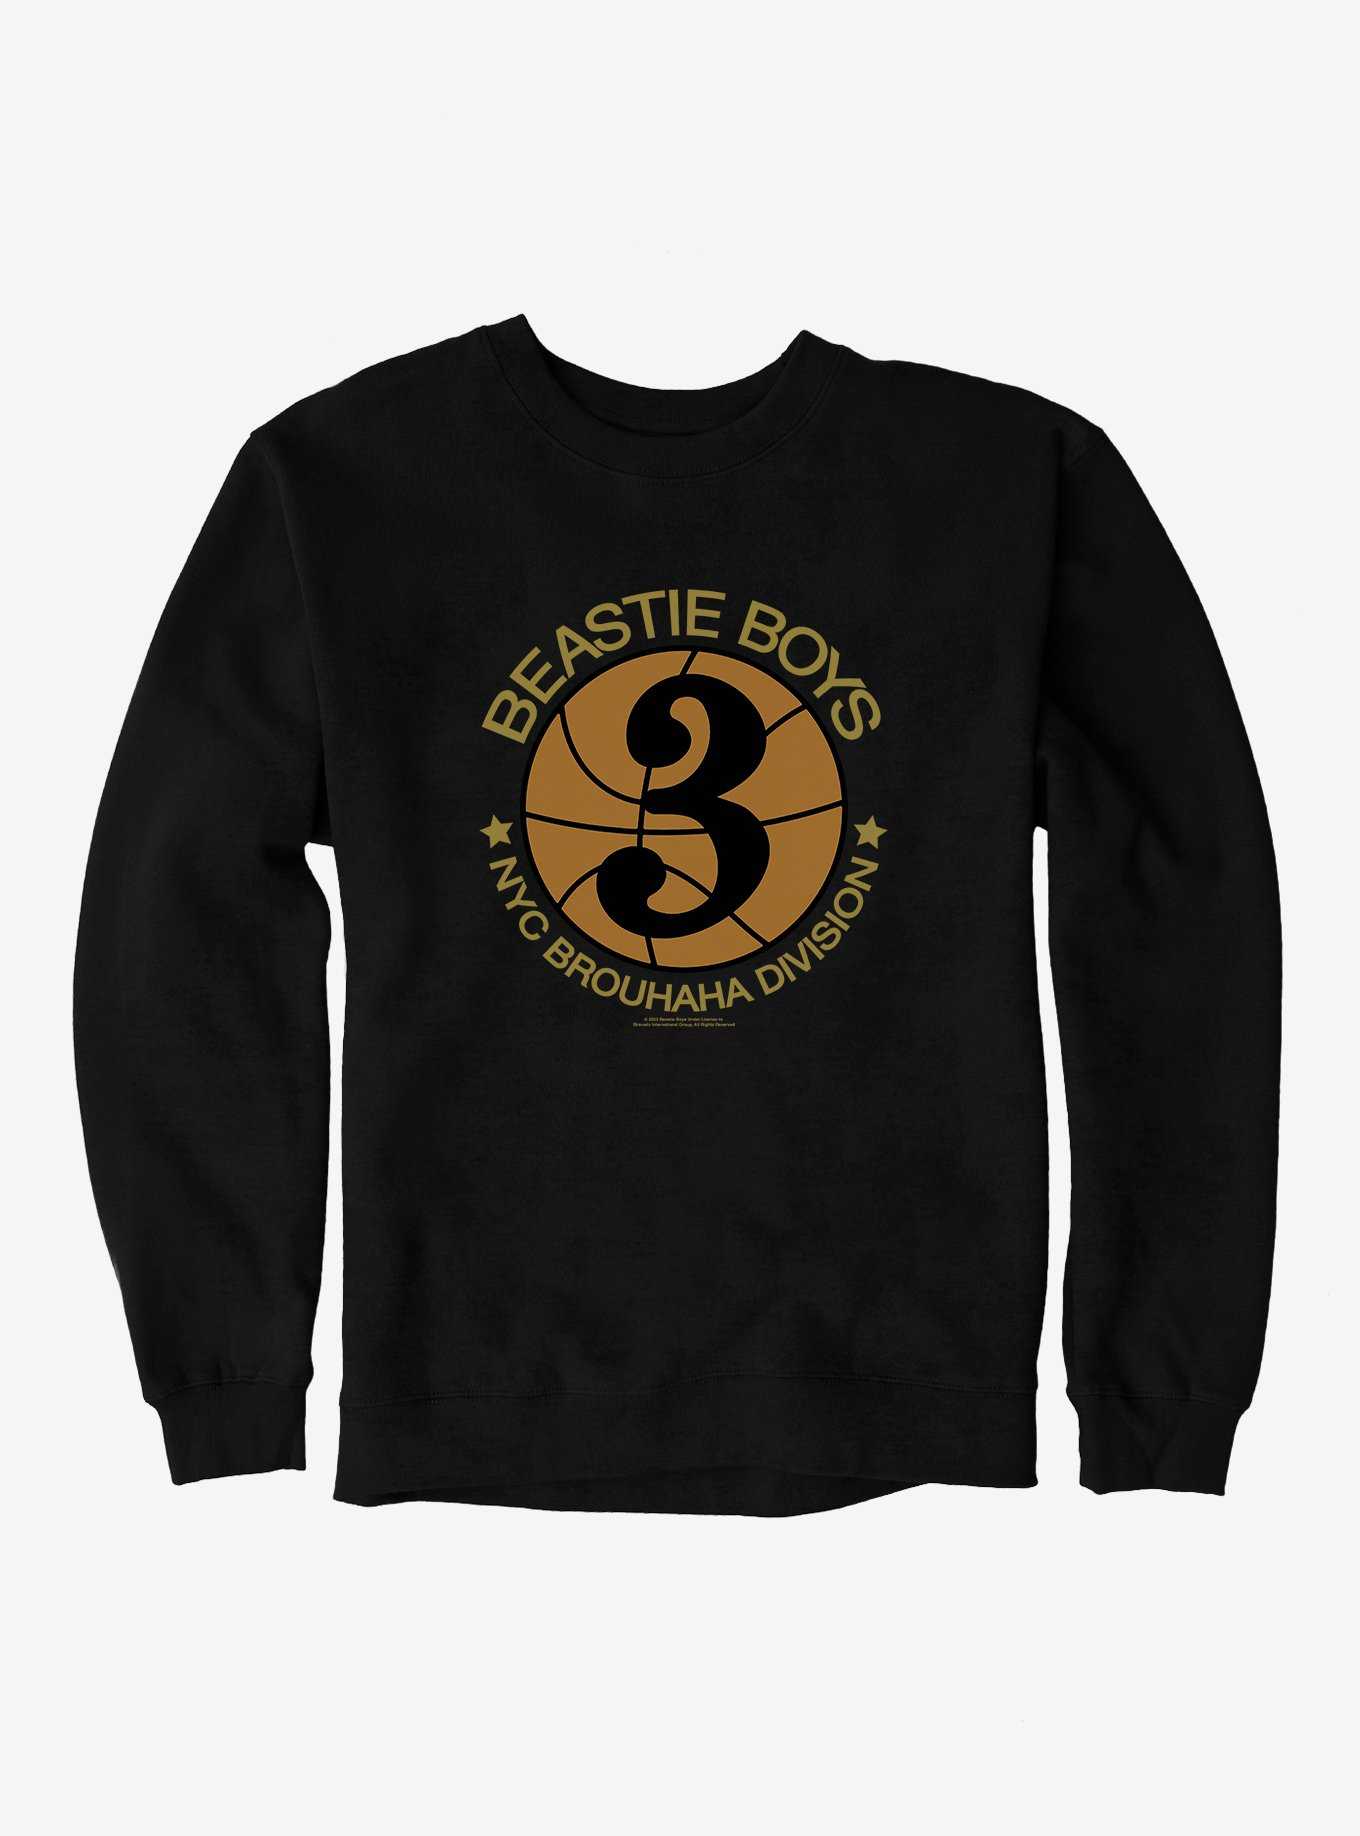 Beastie Boys NYC Brouhaha Division Sweatshirt, , hi-res